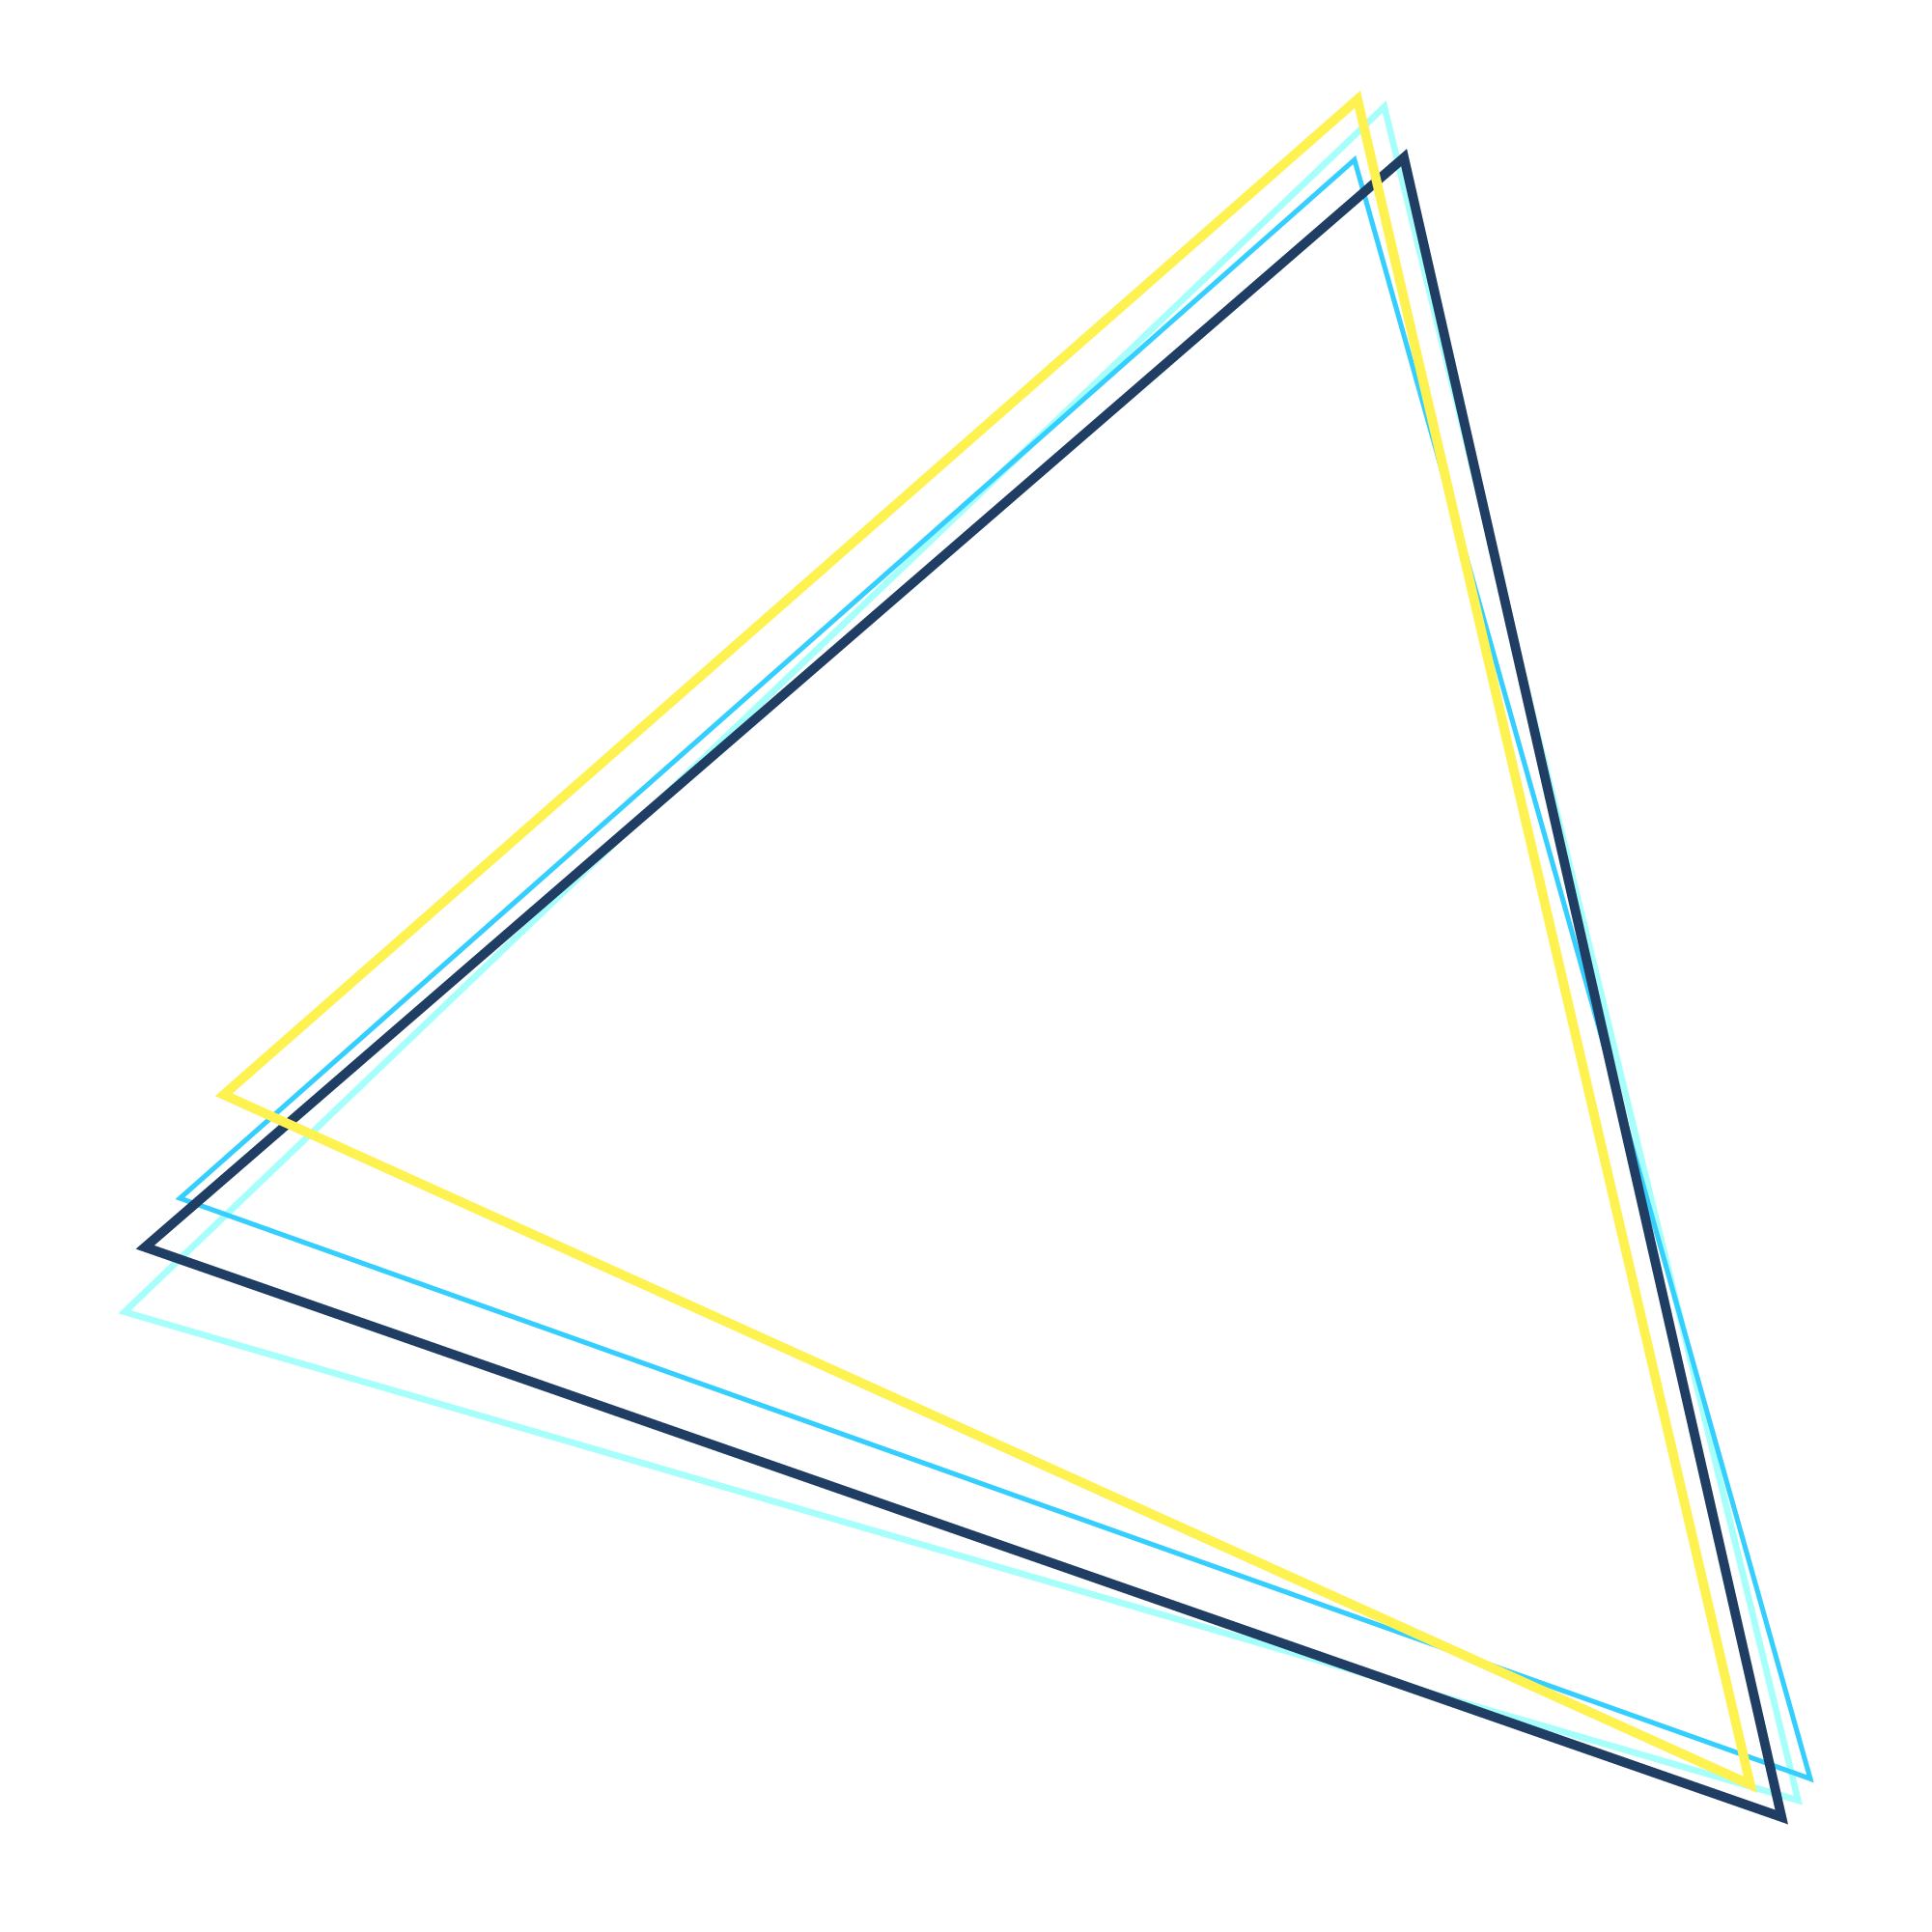 PB_Illustration_Relationship_Triangle